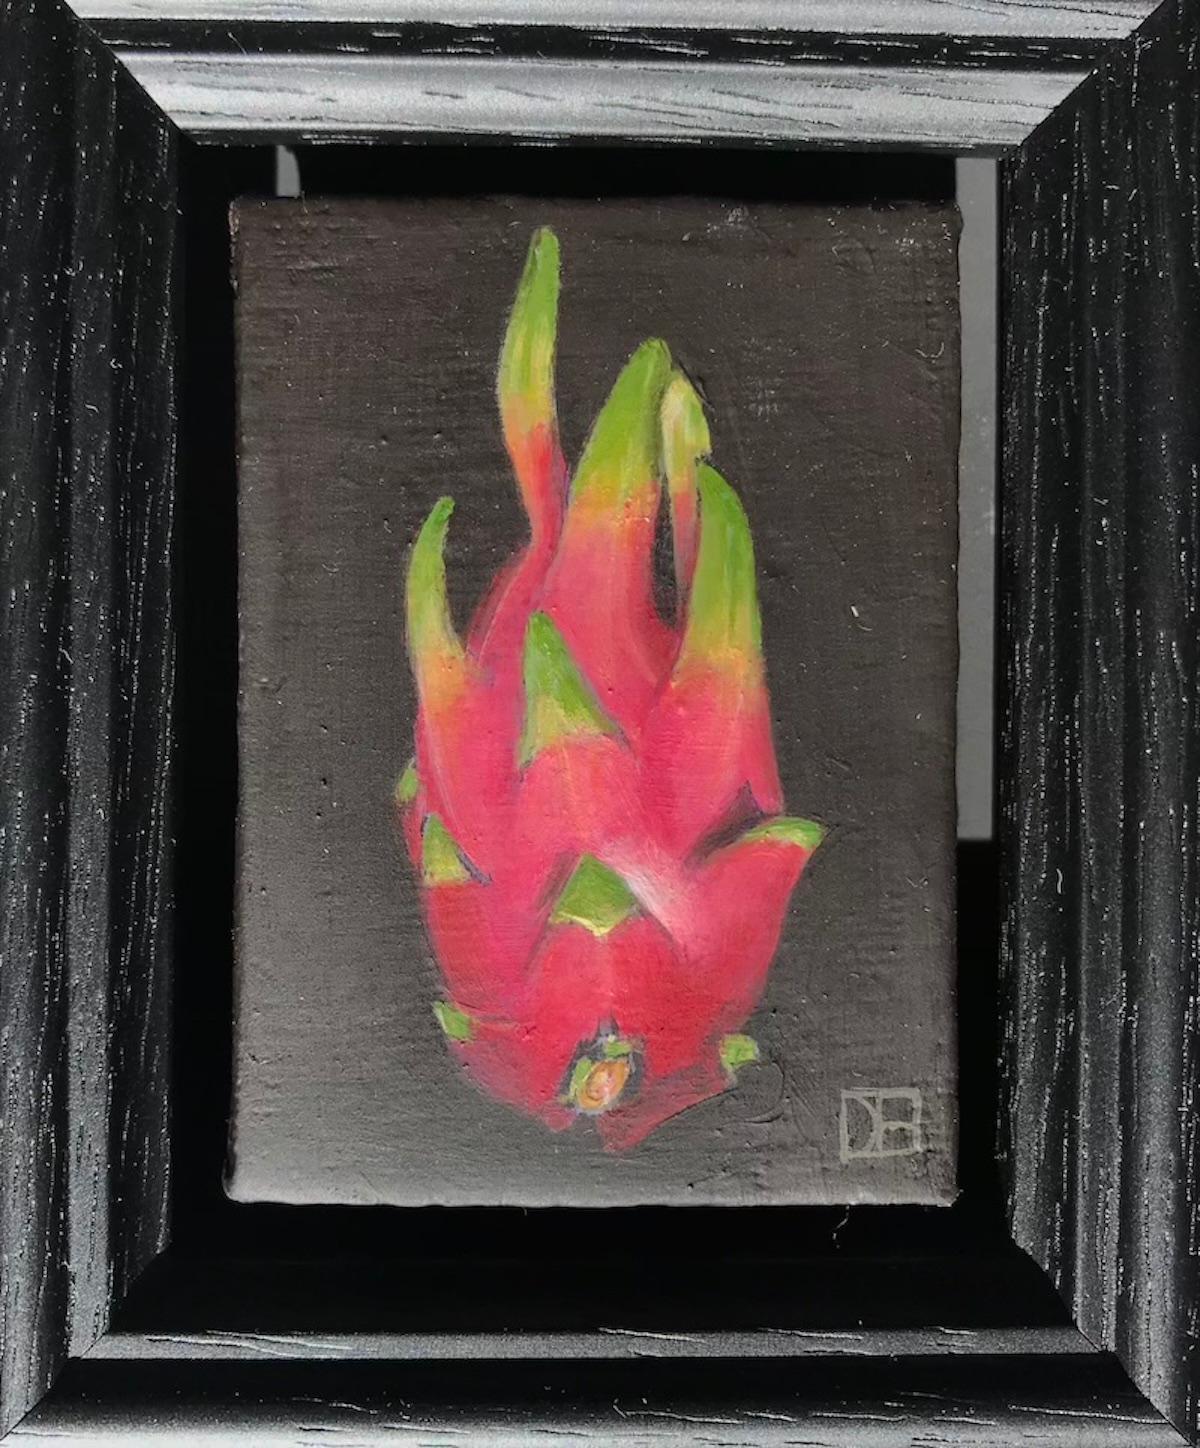 Pocket Dragon Fruit by Dani Humberstone [2022]

original
Oil paint on canvas
Image size: H:7 cm x W:5 cm
Complete Size of Unframed Work: H:7 cm x W:5 cm x D:1cm
Frame Size: H:18.5 cm x W:16.5 cm x D:3.5cm
Sold Framed
Please note that insitu images